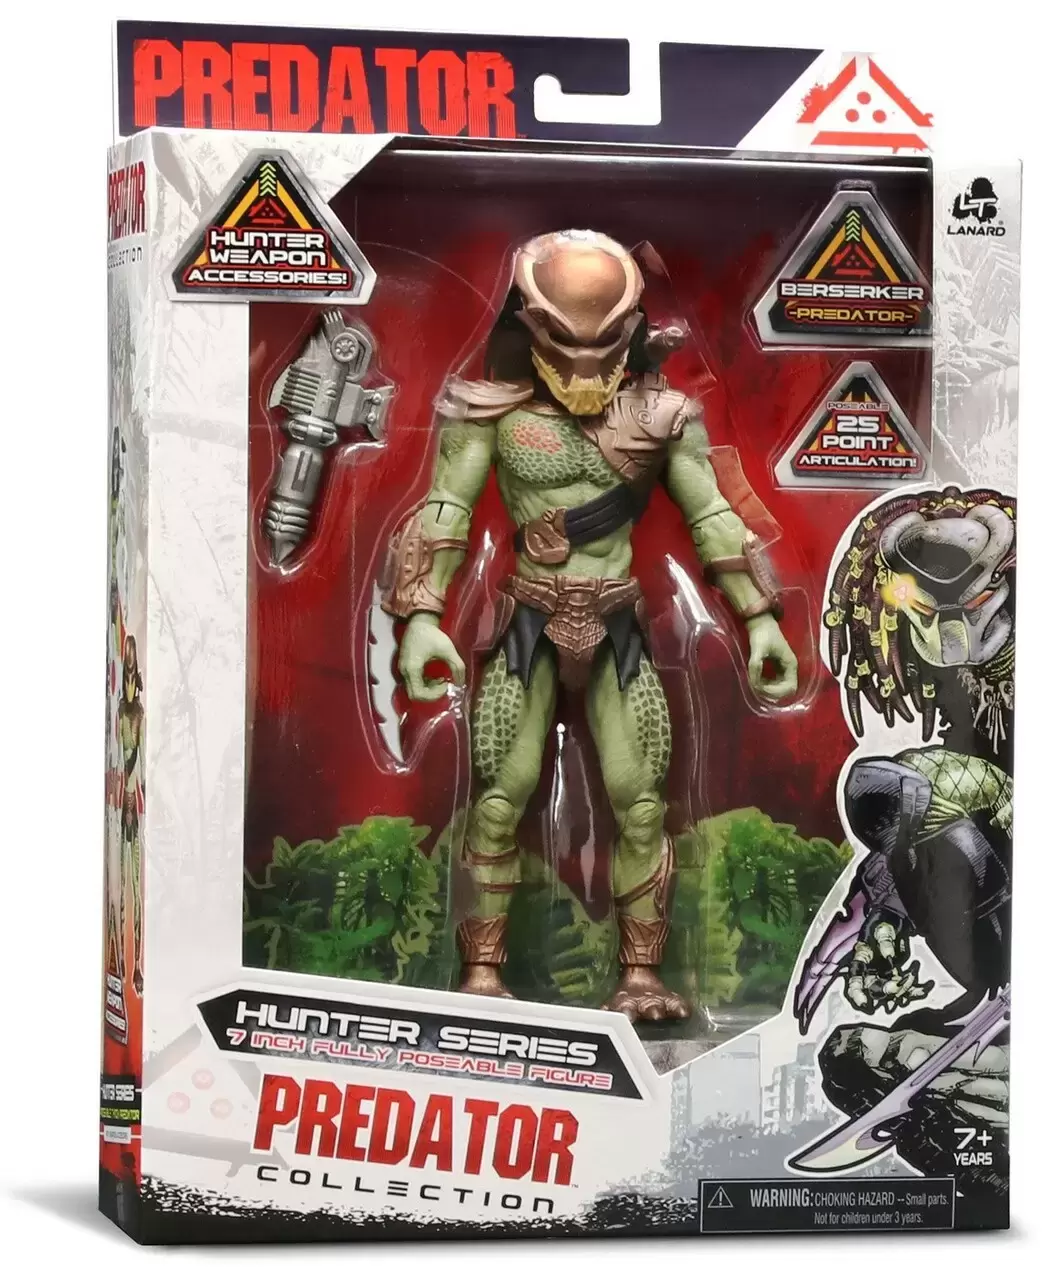 Predator Collection - Berserker Predator